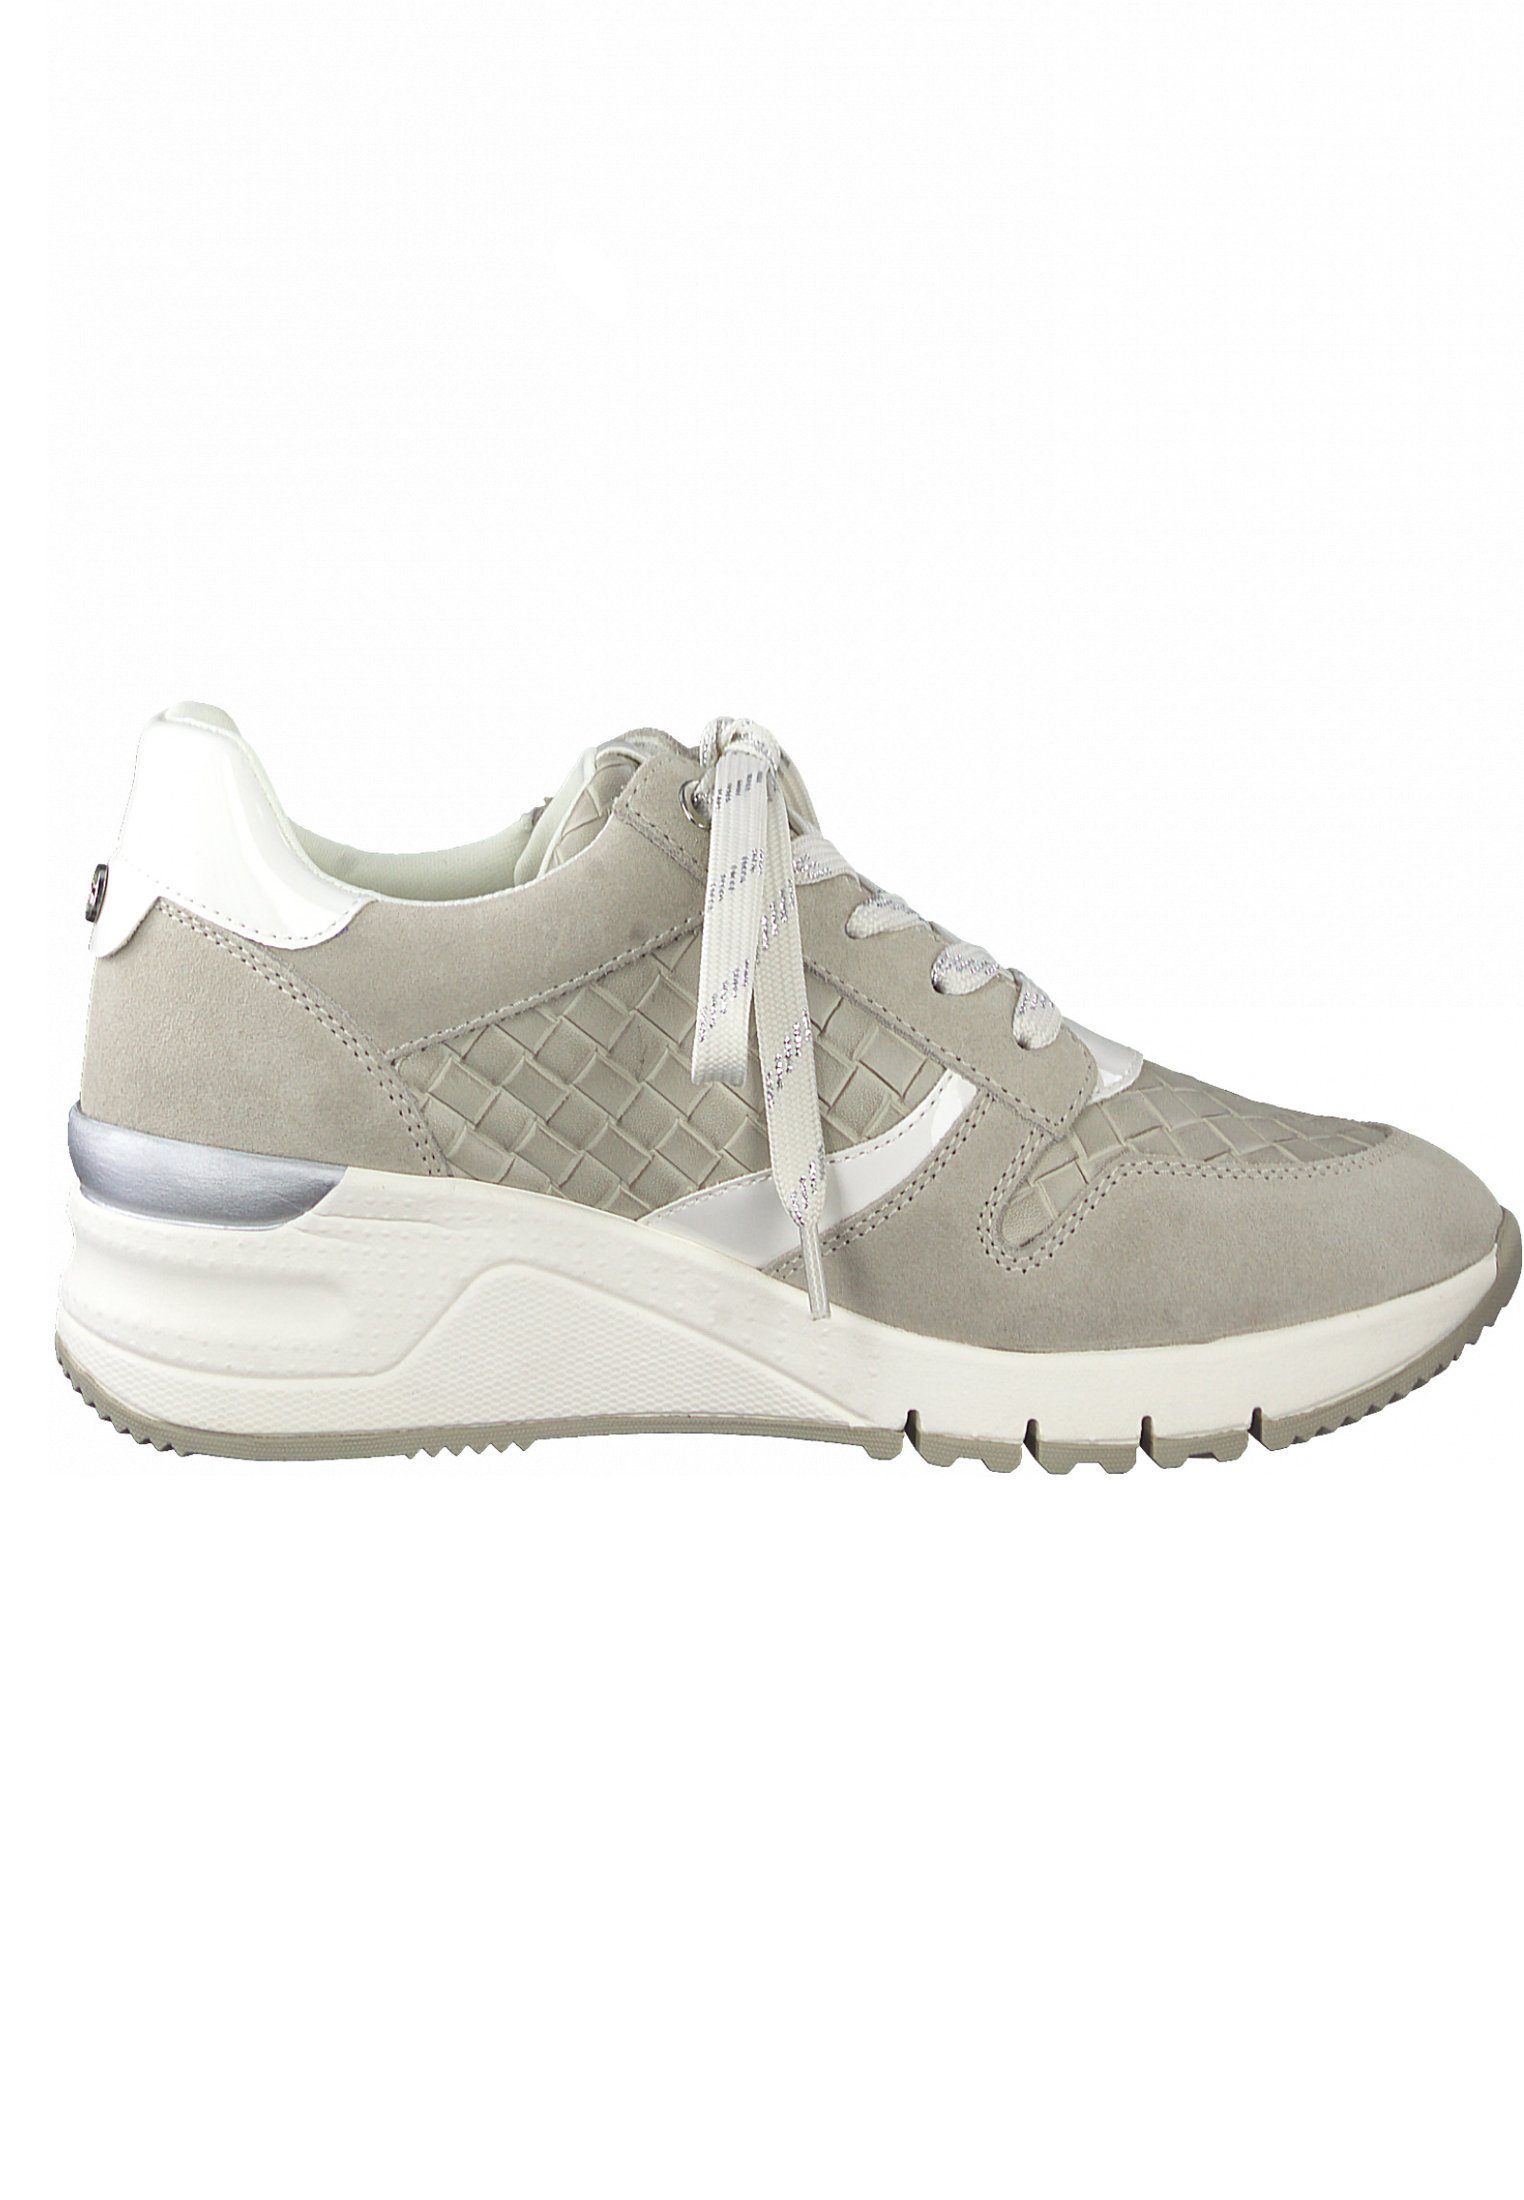 Tamaris 1-23702-28 Grau Sneaker 257 (LIGHT GREY/STR) Grey Light